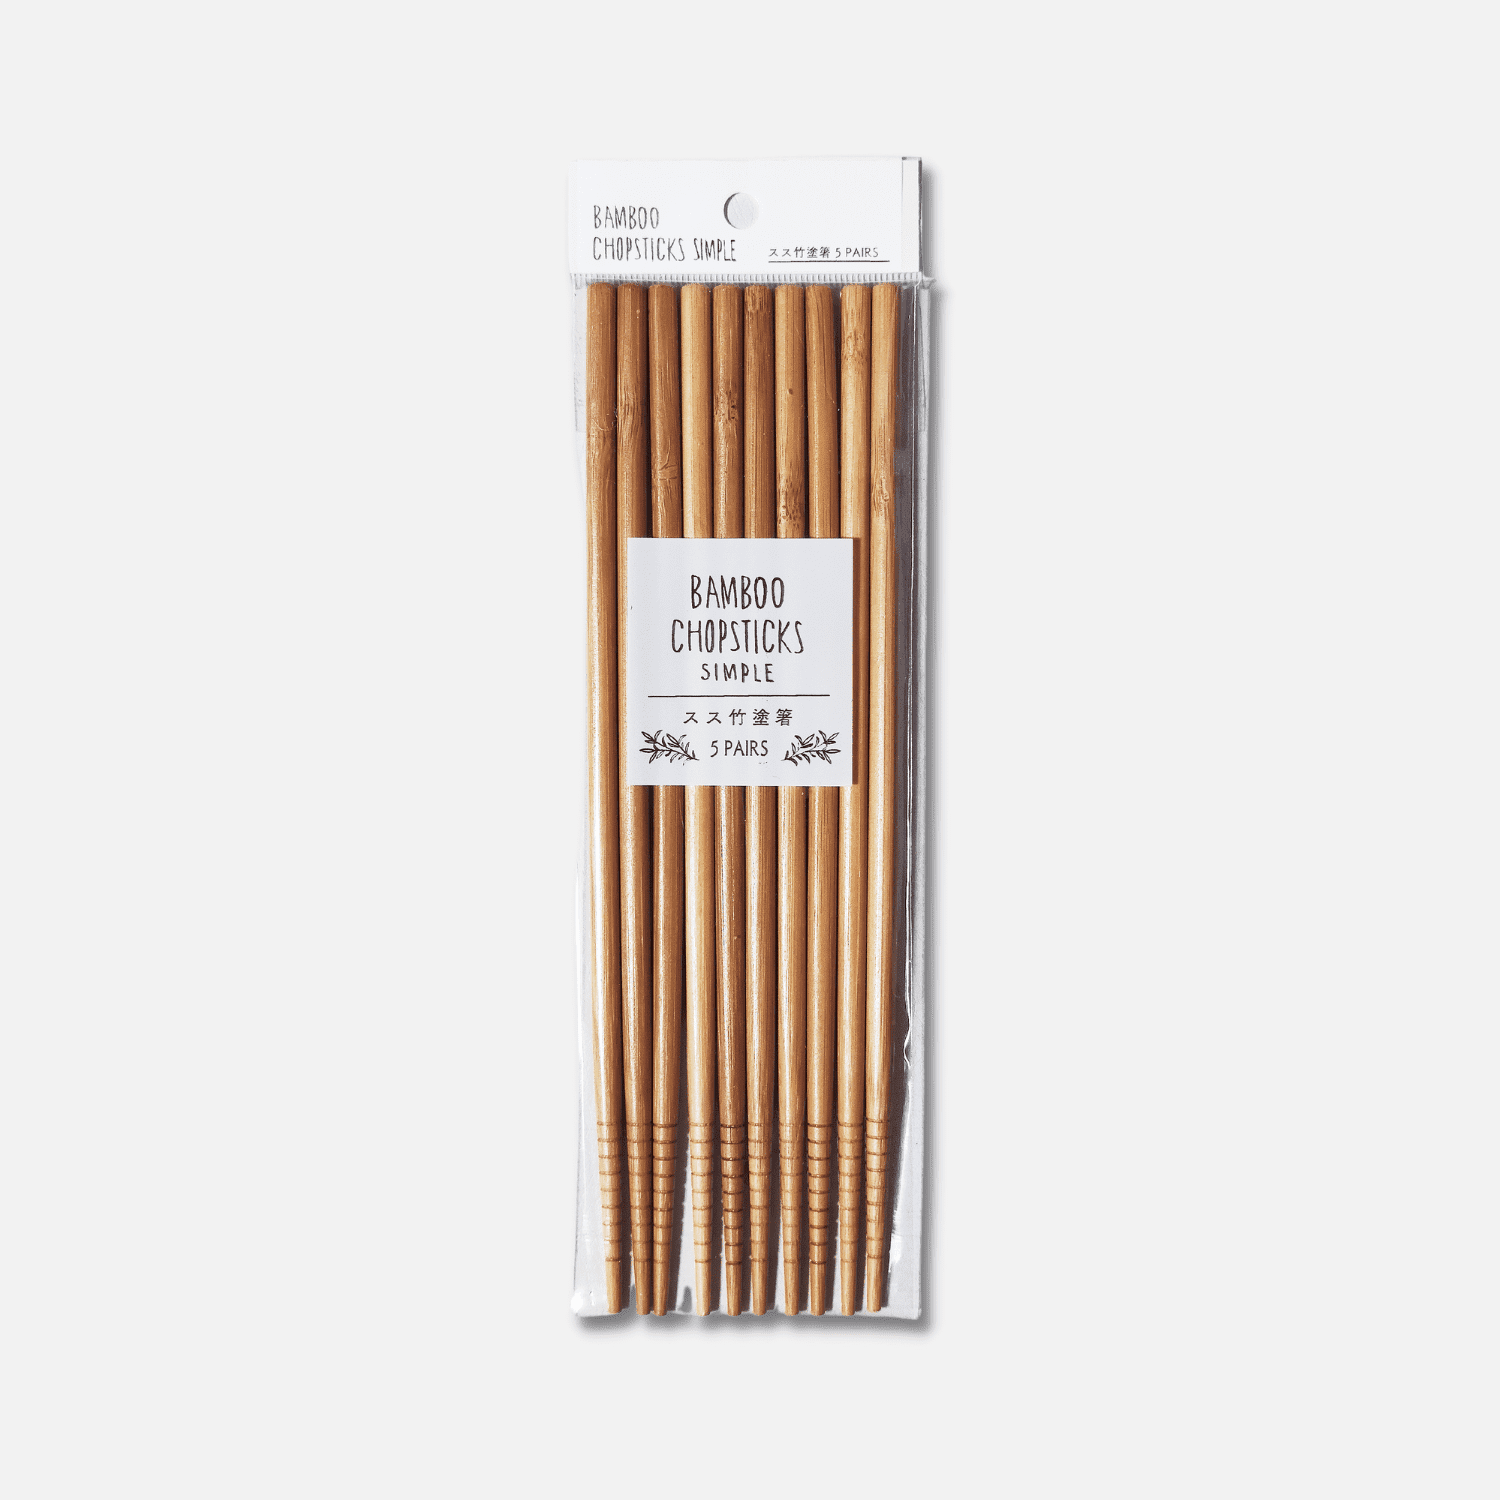 Bamboo Chopsticks Simple 5 Pairs - Buy Me Japan